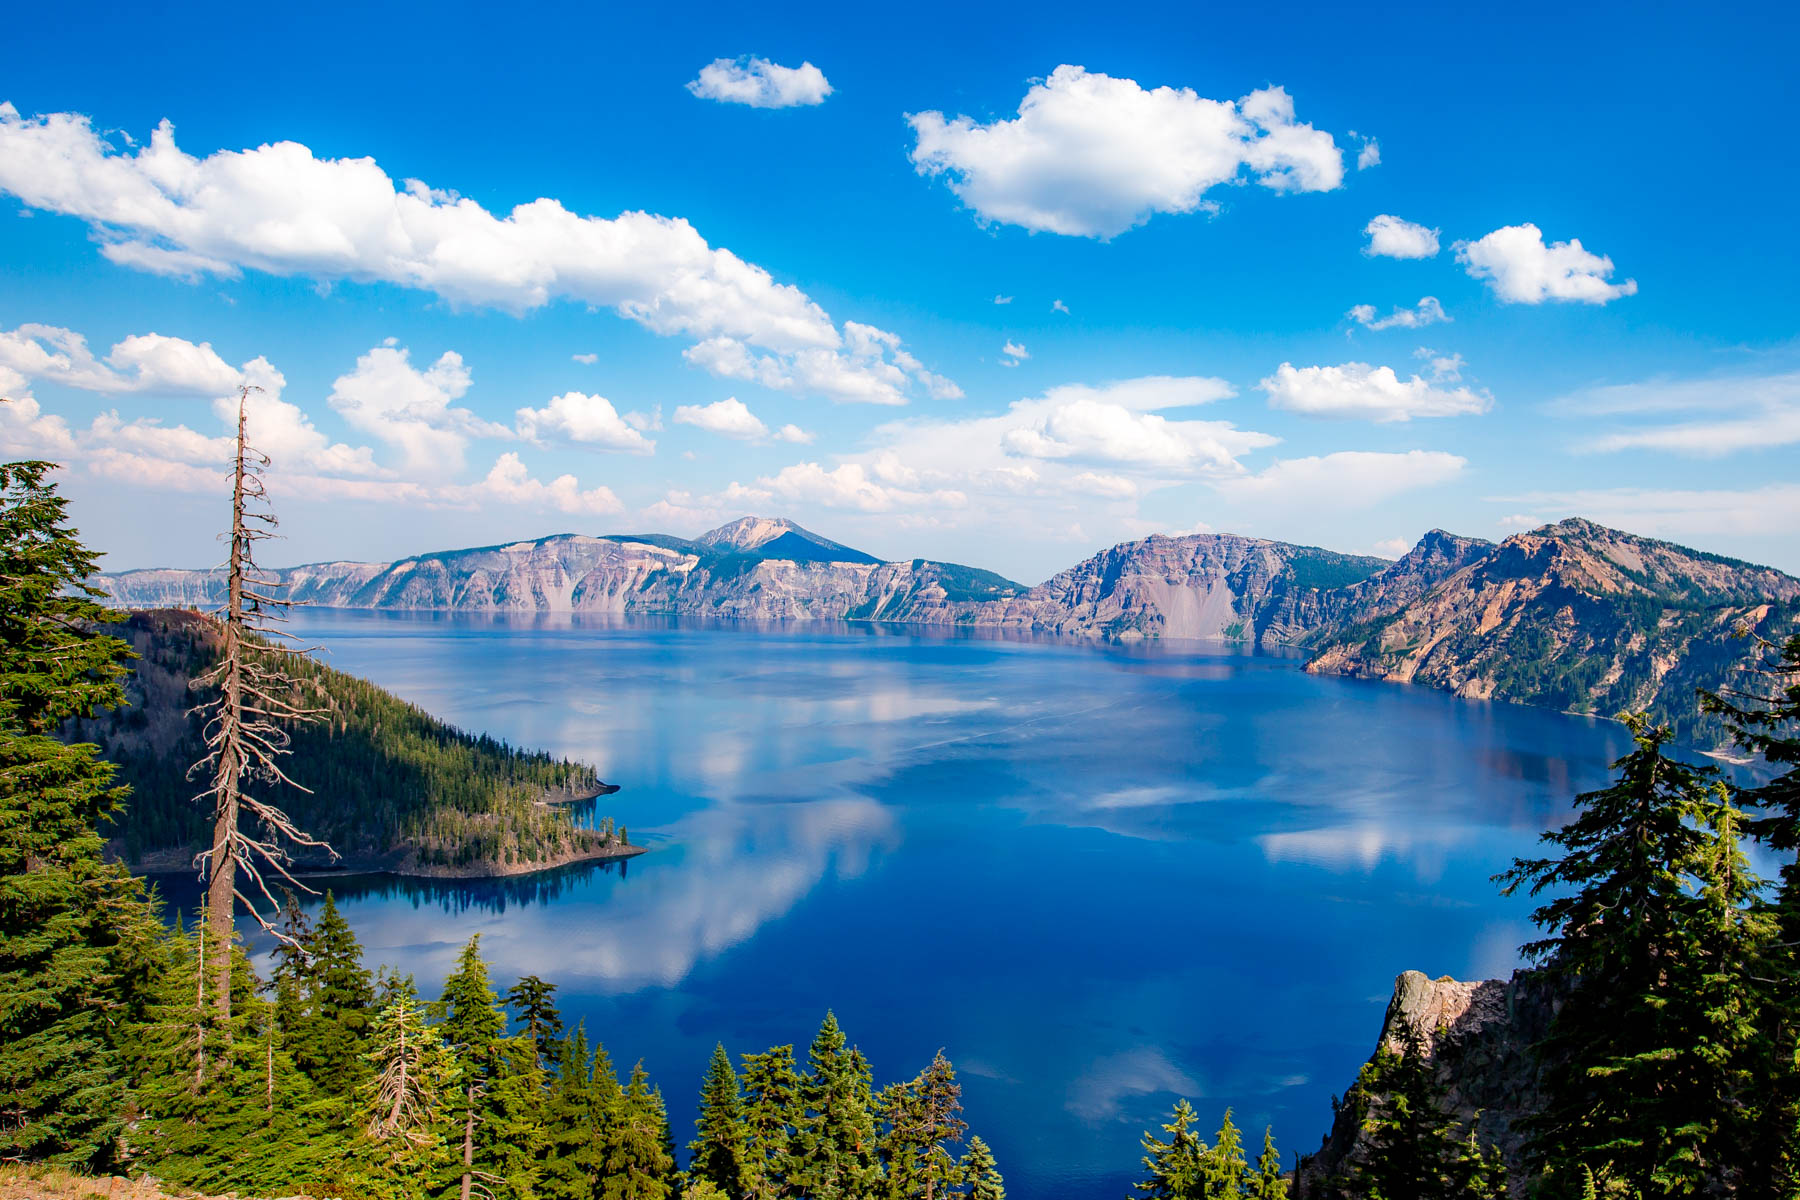 best lakes Oregon
Crater Lake Oregon